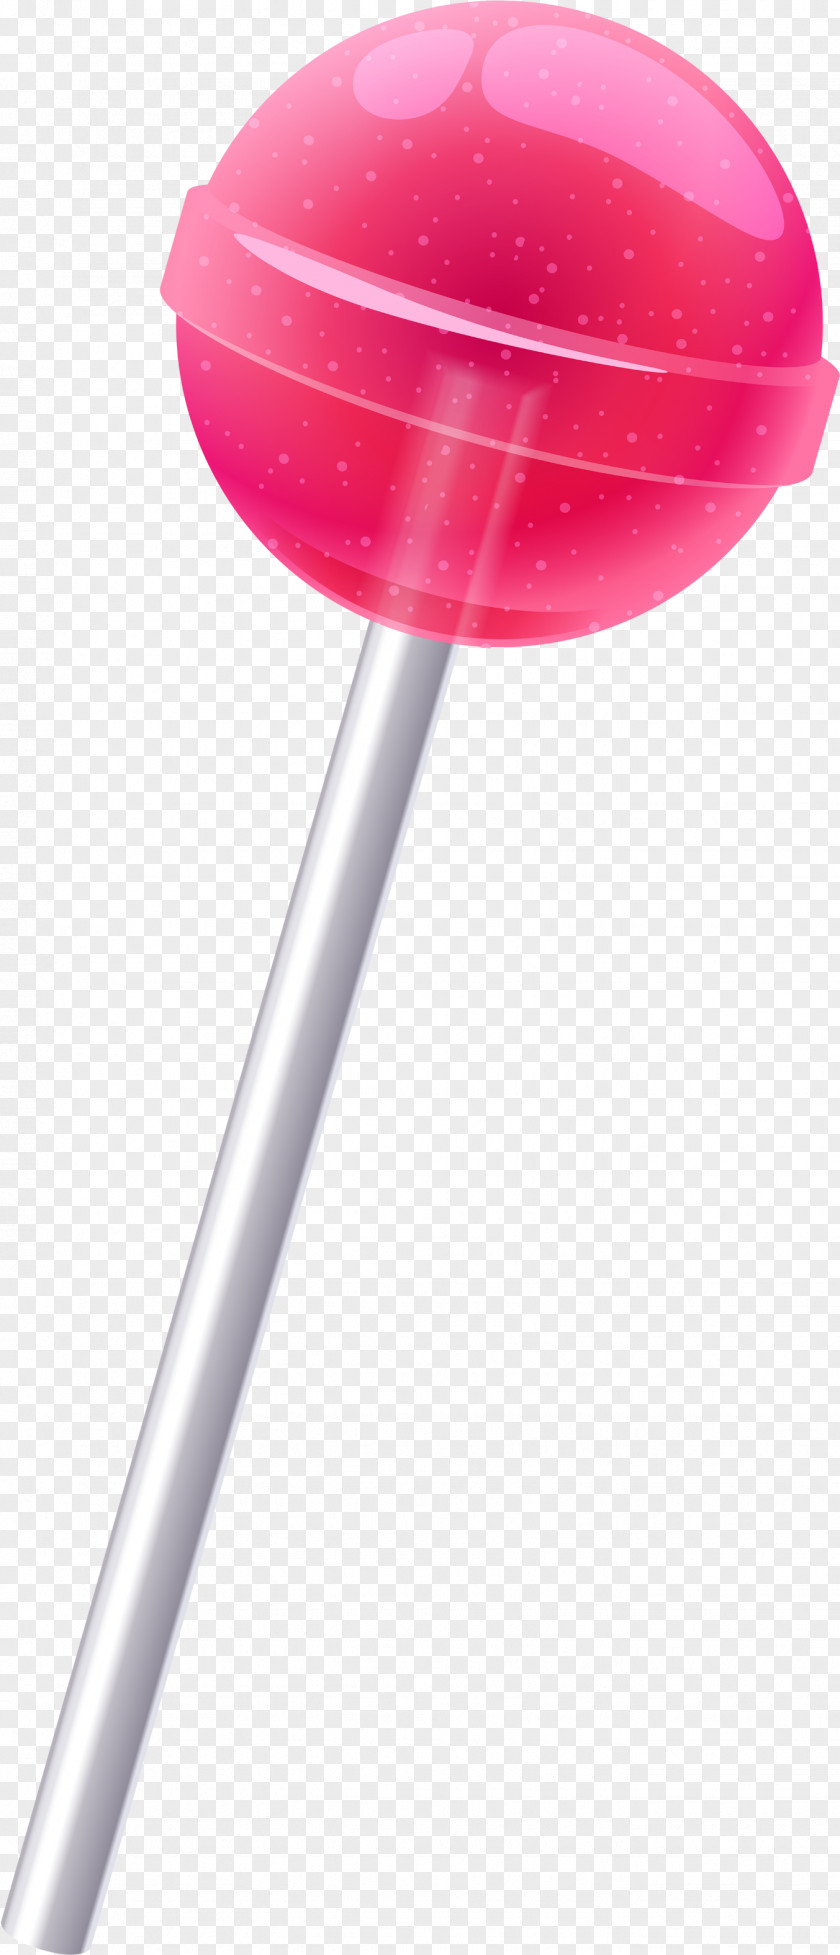 Magenta Material Property Lollipop Cartoon PNG